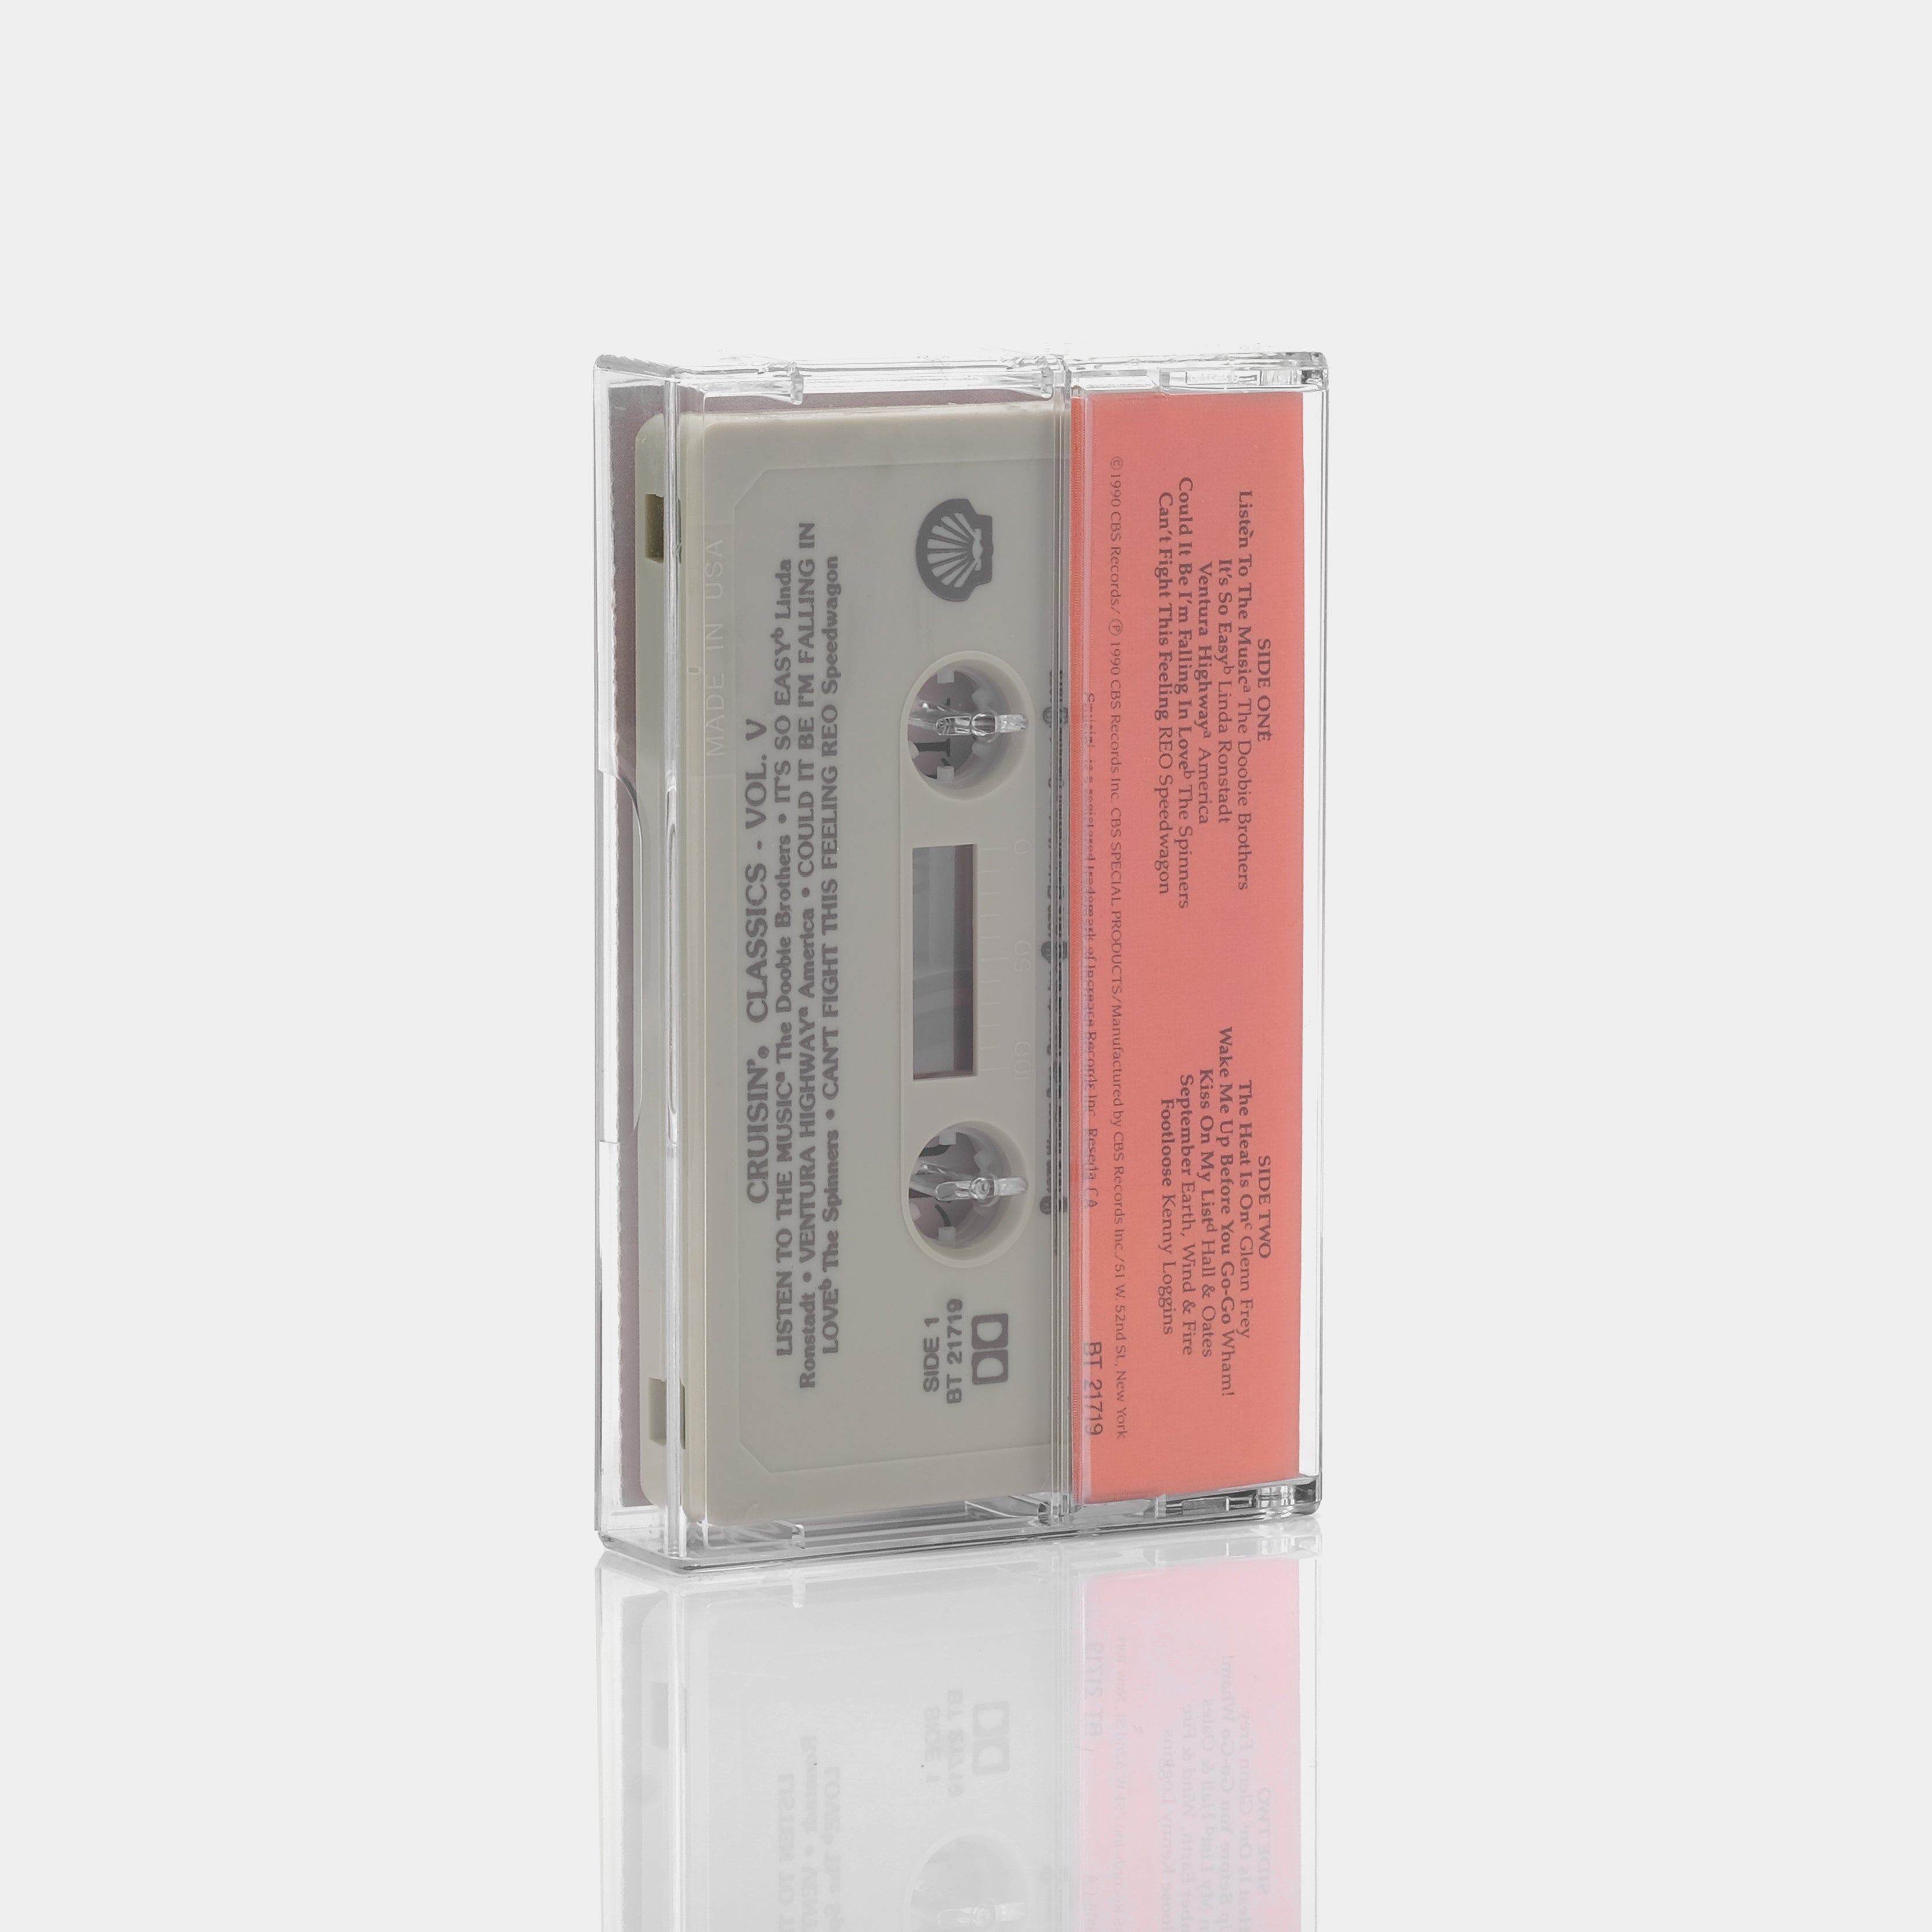 Cruisin' Classics Vol. V Cassette Tape